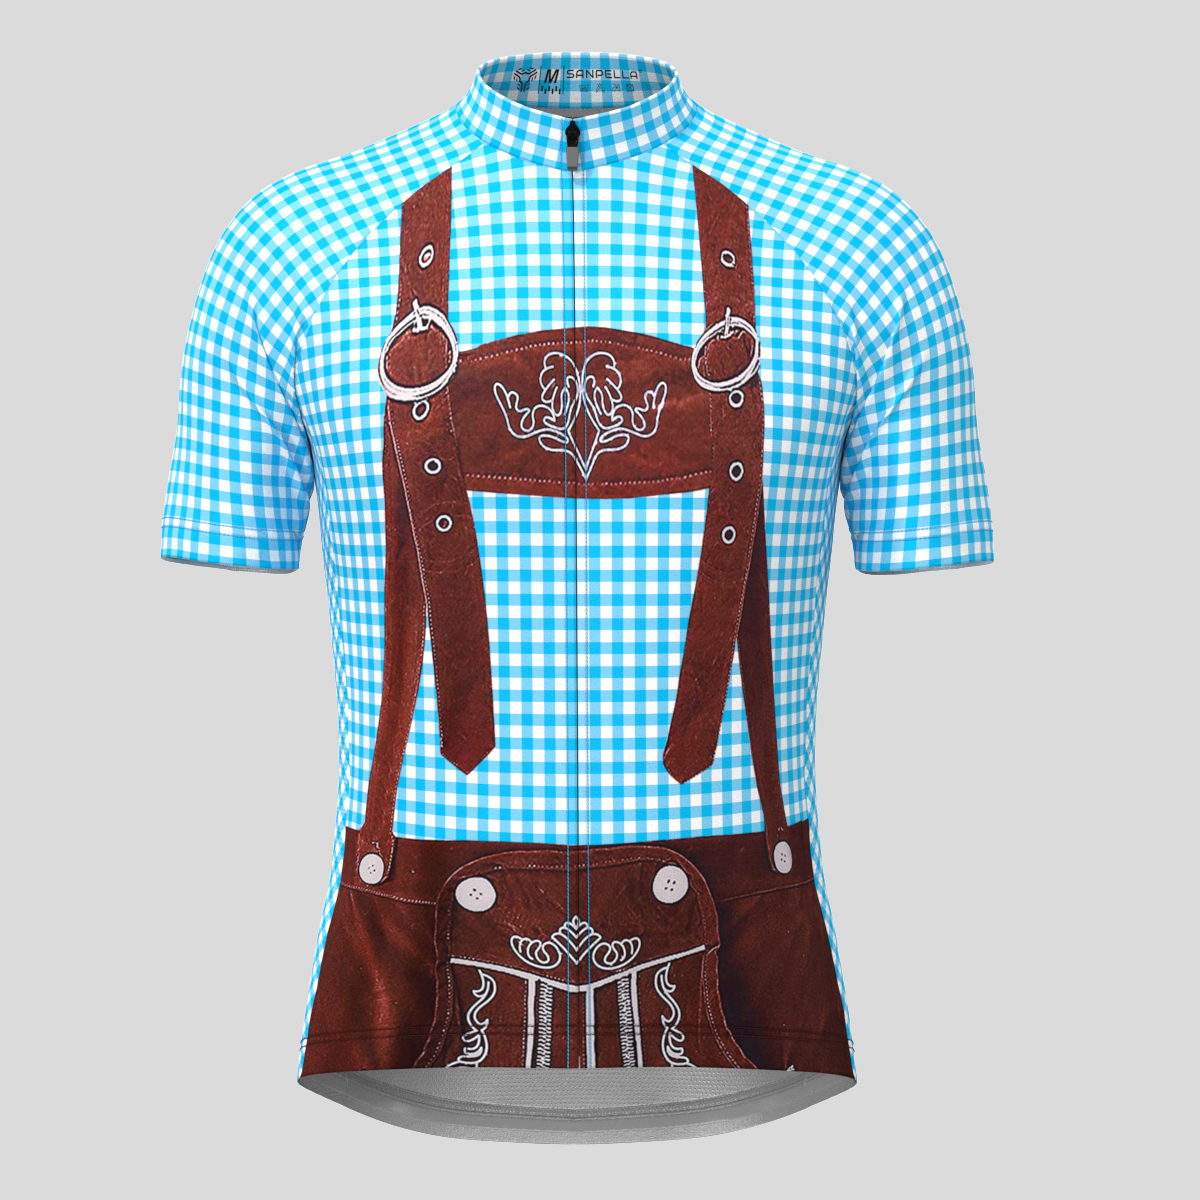 Men's Oktoberfest Costume Cycling Jersey - Blue